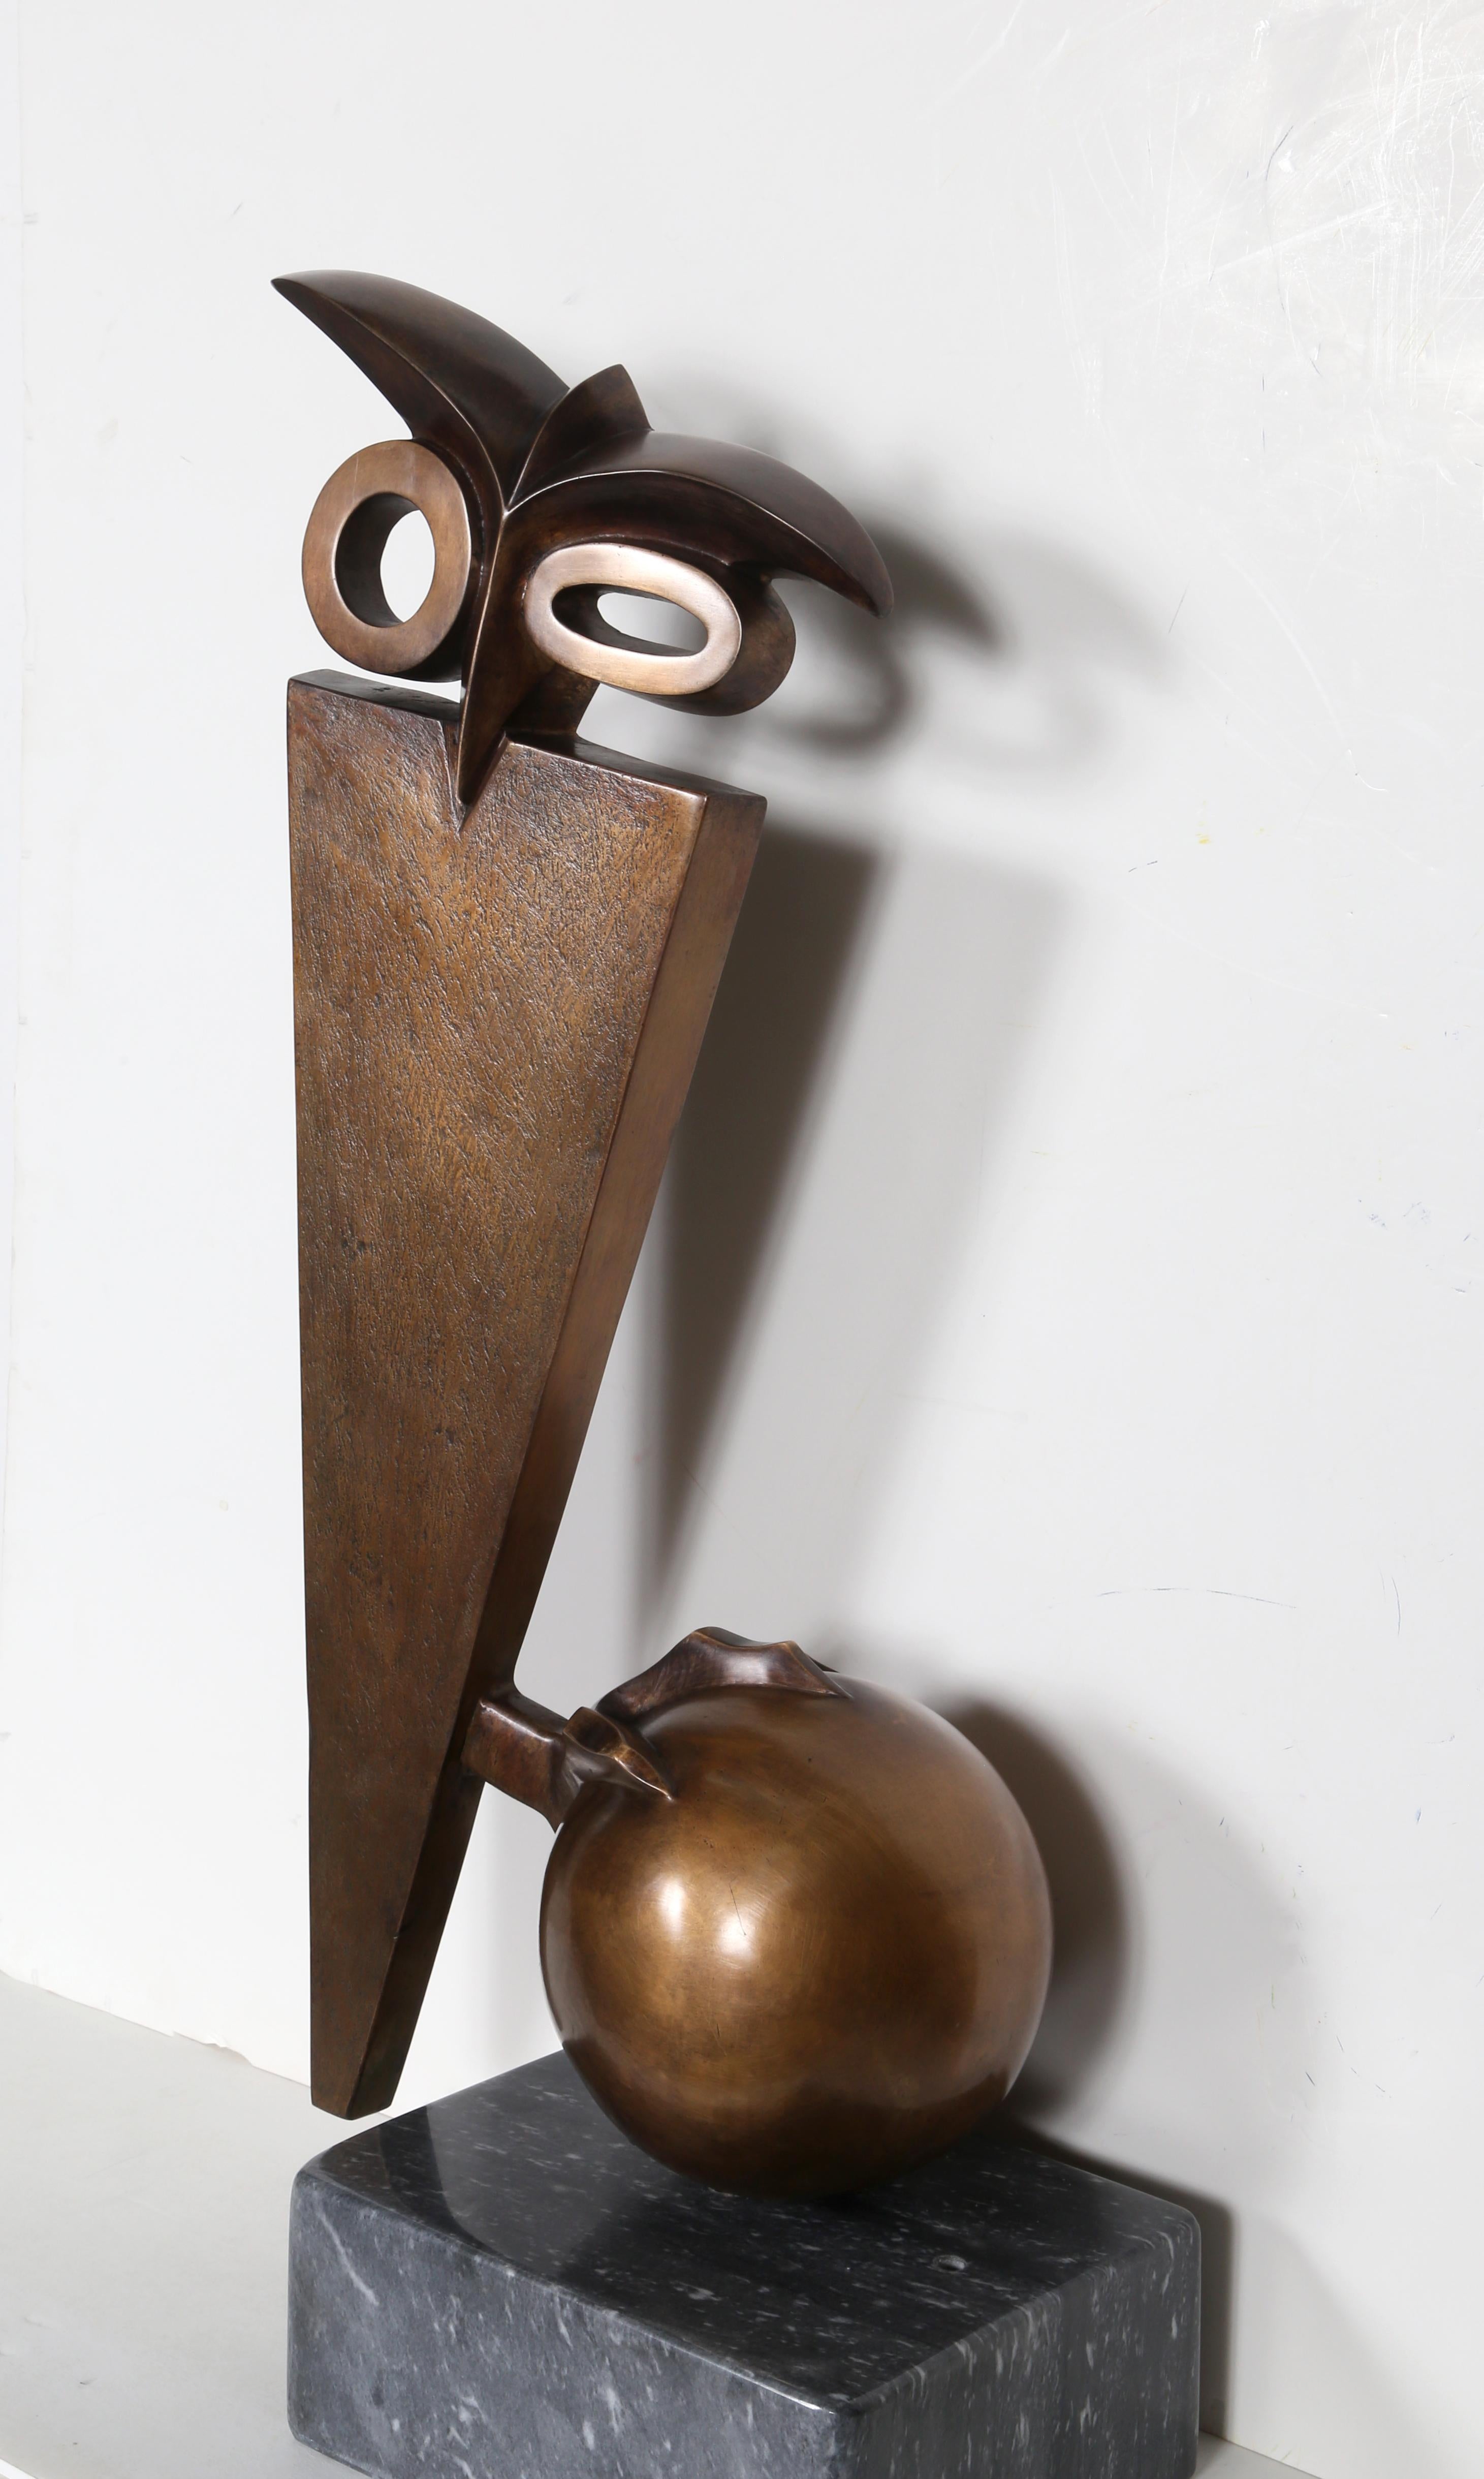 Hibou perché sur boule, bronze moderne d'Antonovici, 1957 - Sculpture de Constantin Antonovici